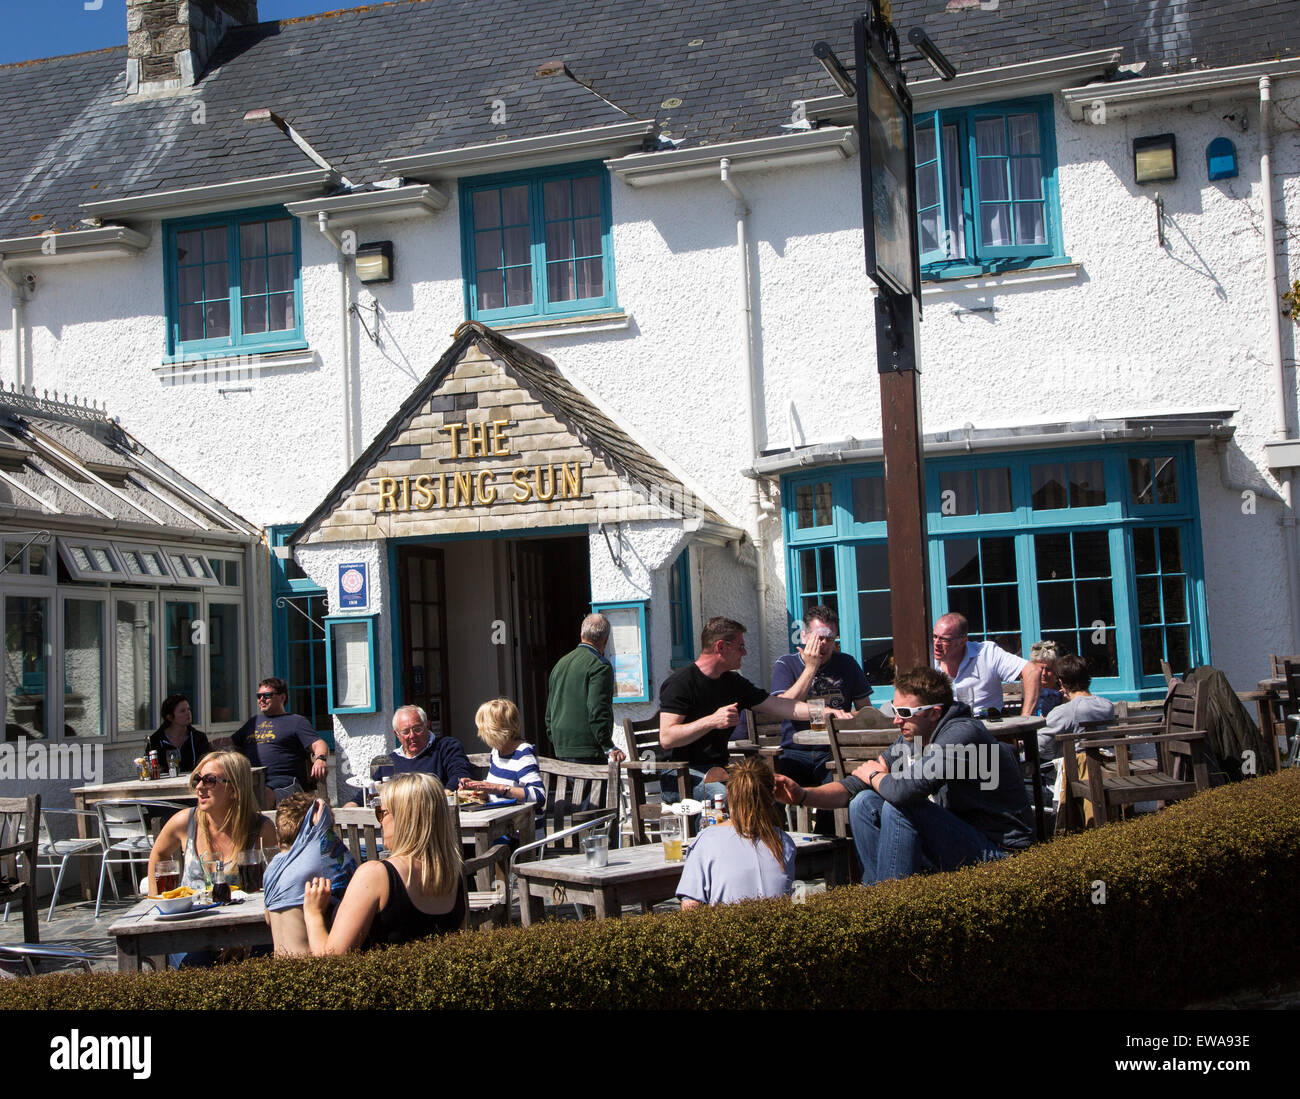 People sitting outside The Rising Sun pub, St Mawes, Cornwall, England, UK Stock Photo